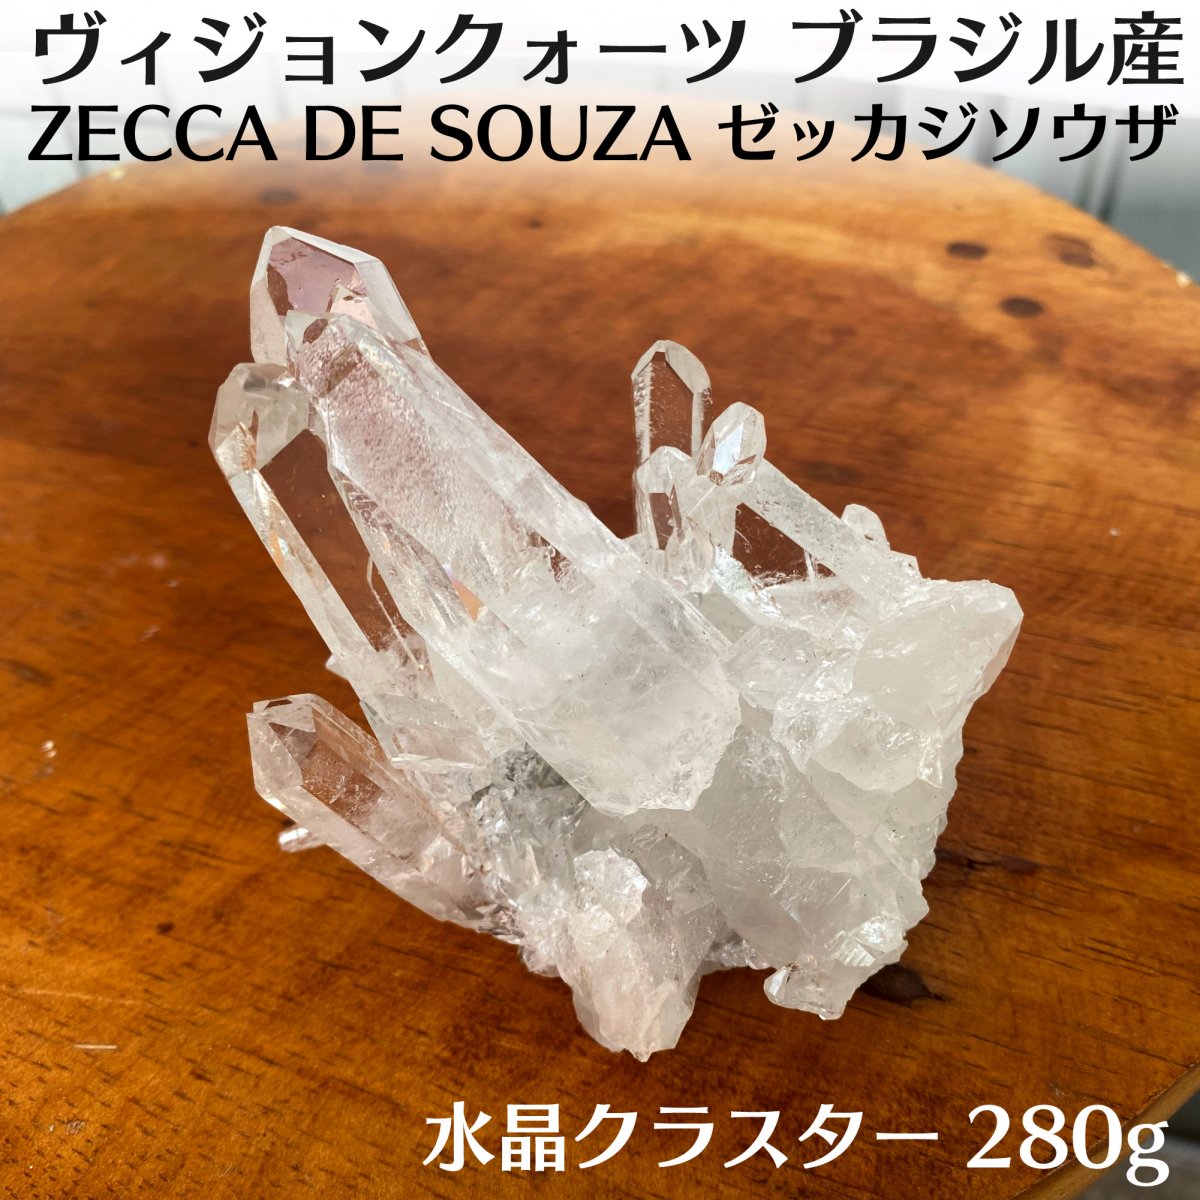 【20%OFF】ヴィジョンクォーツ 水晶クラスター(280g)/ZECA DE SOUZA(ゼッカ・ジ・ソウザ産)